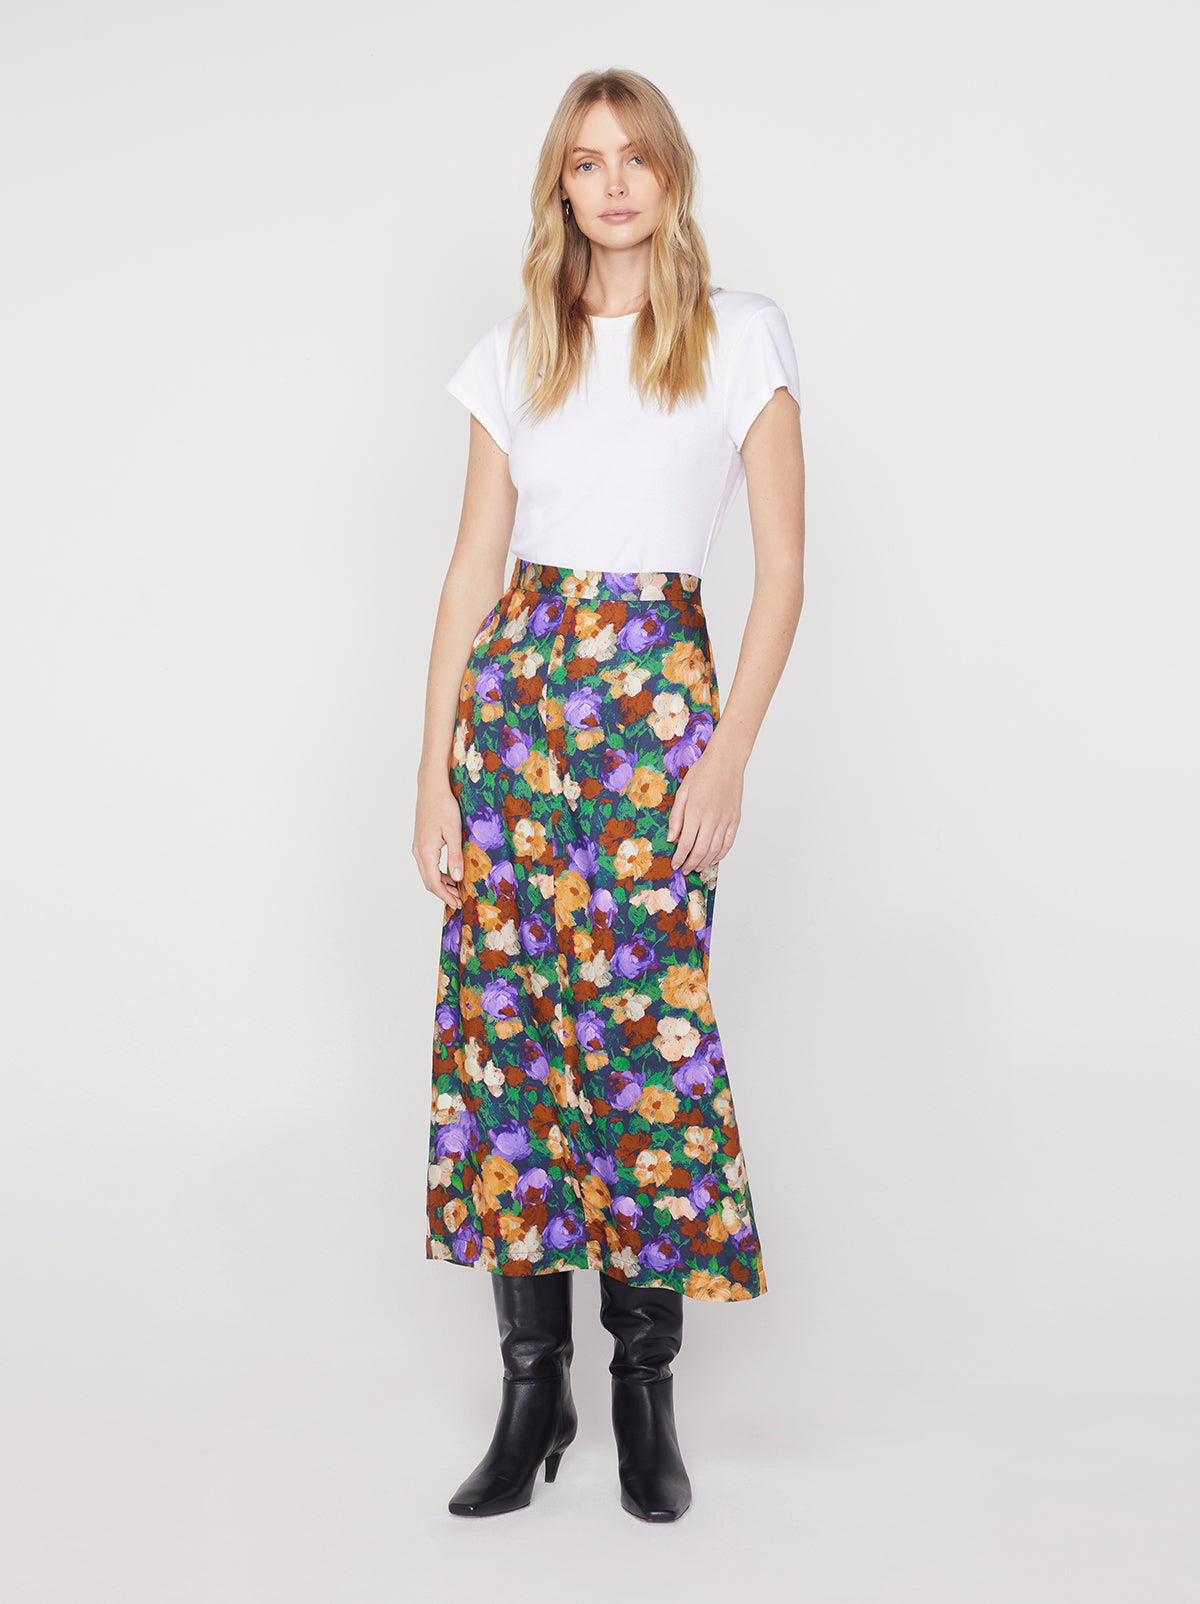 Laurel Iris Impressionist Floral Skirt